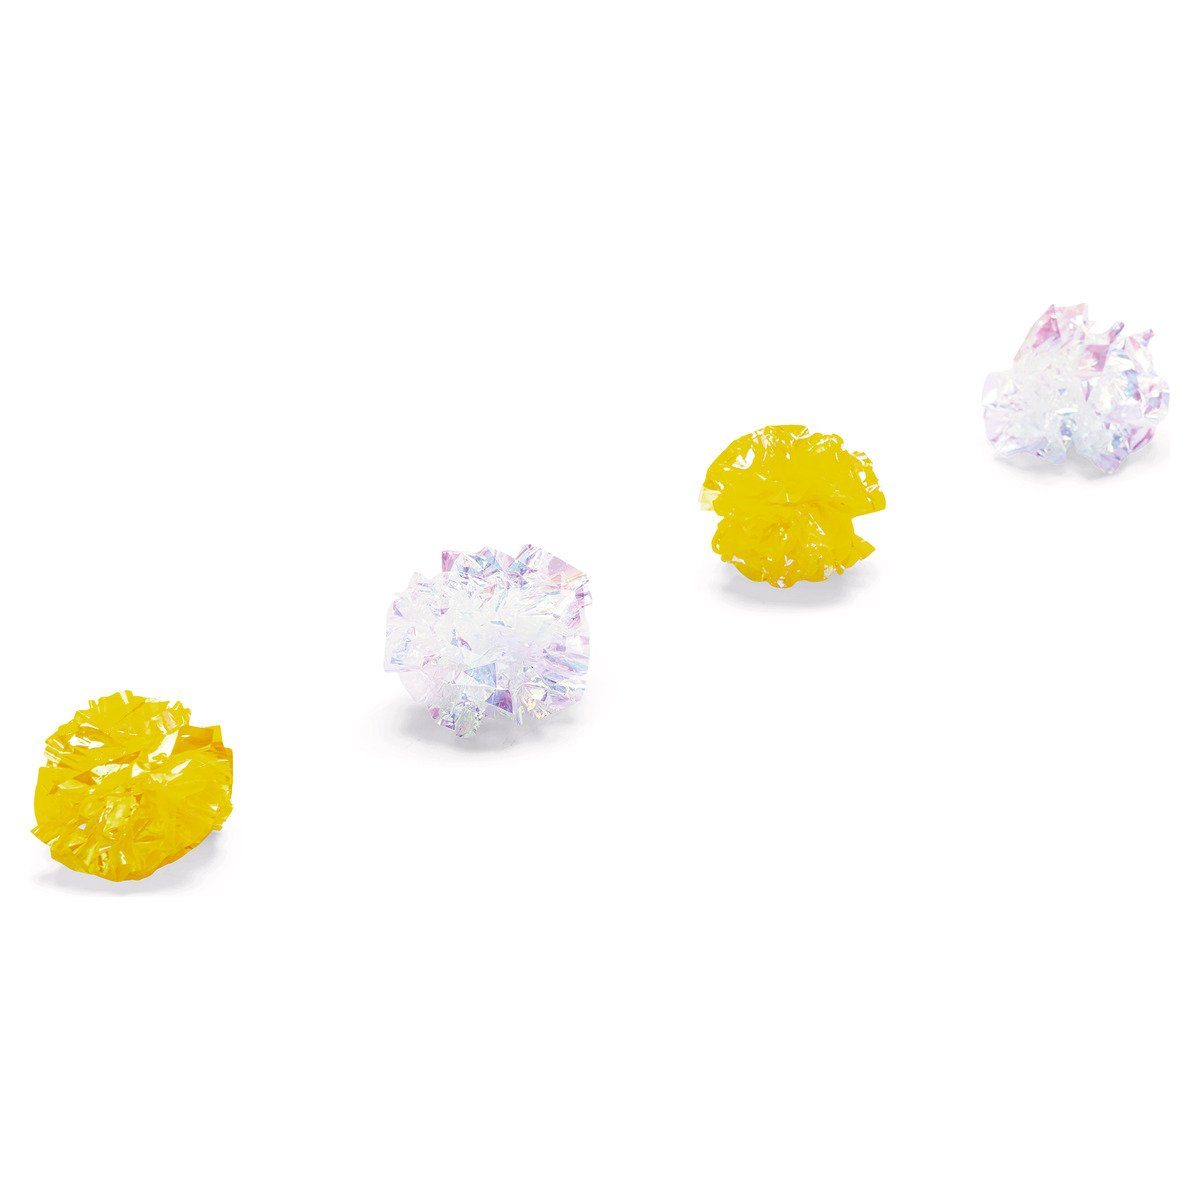 Katzenspielzeug Evy Knisterbälle Kitten Beeztees gelb/transparent Tierball